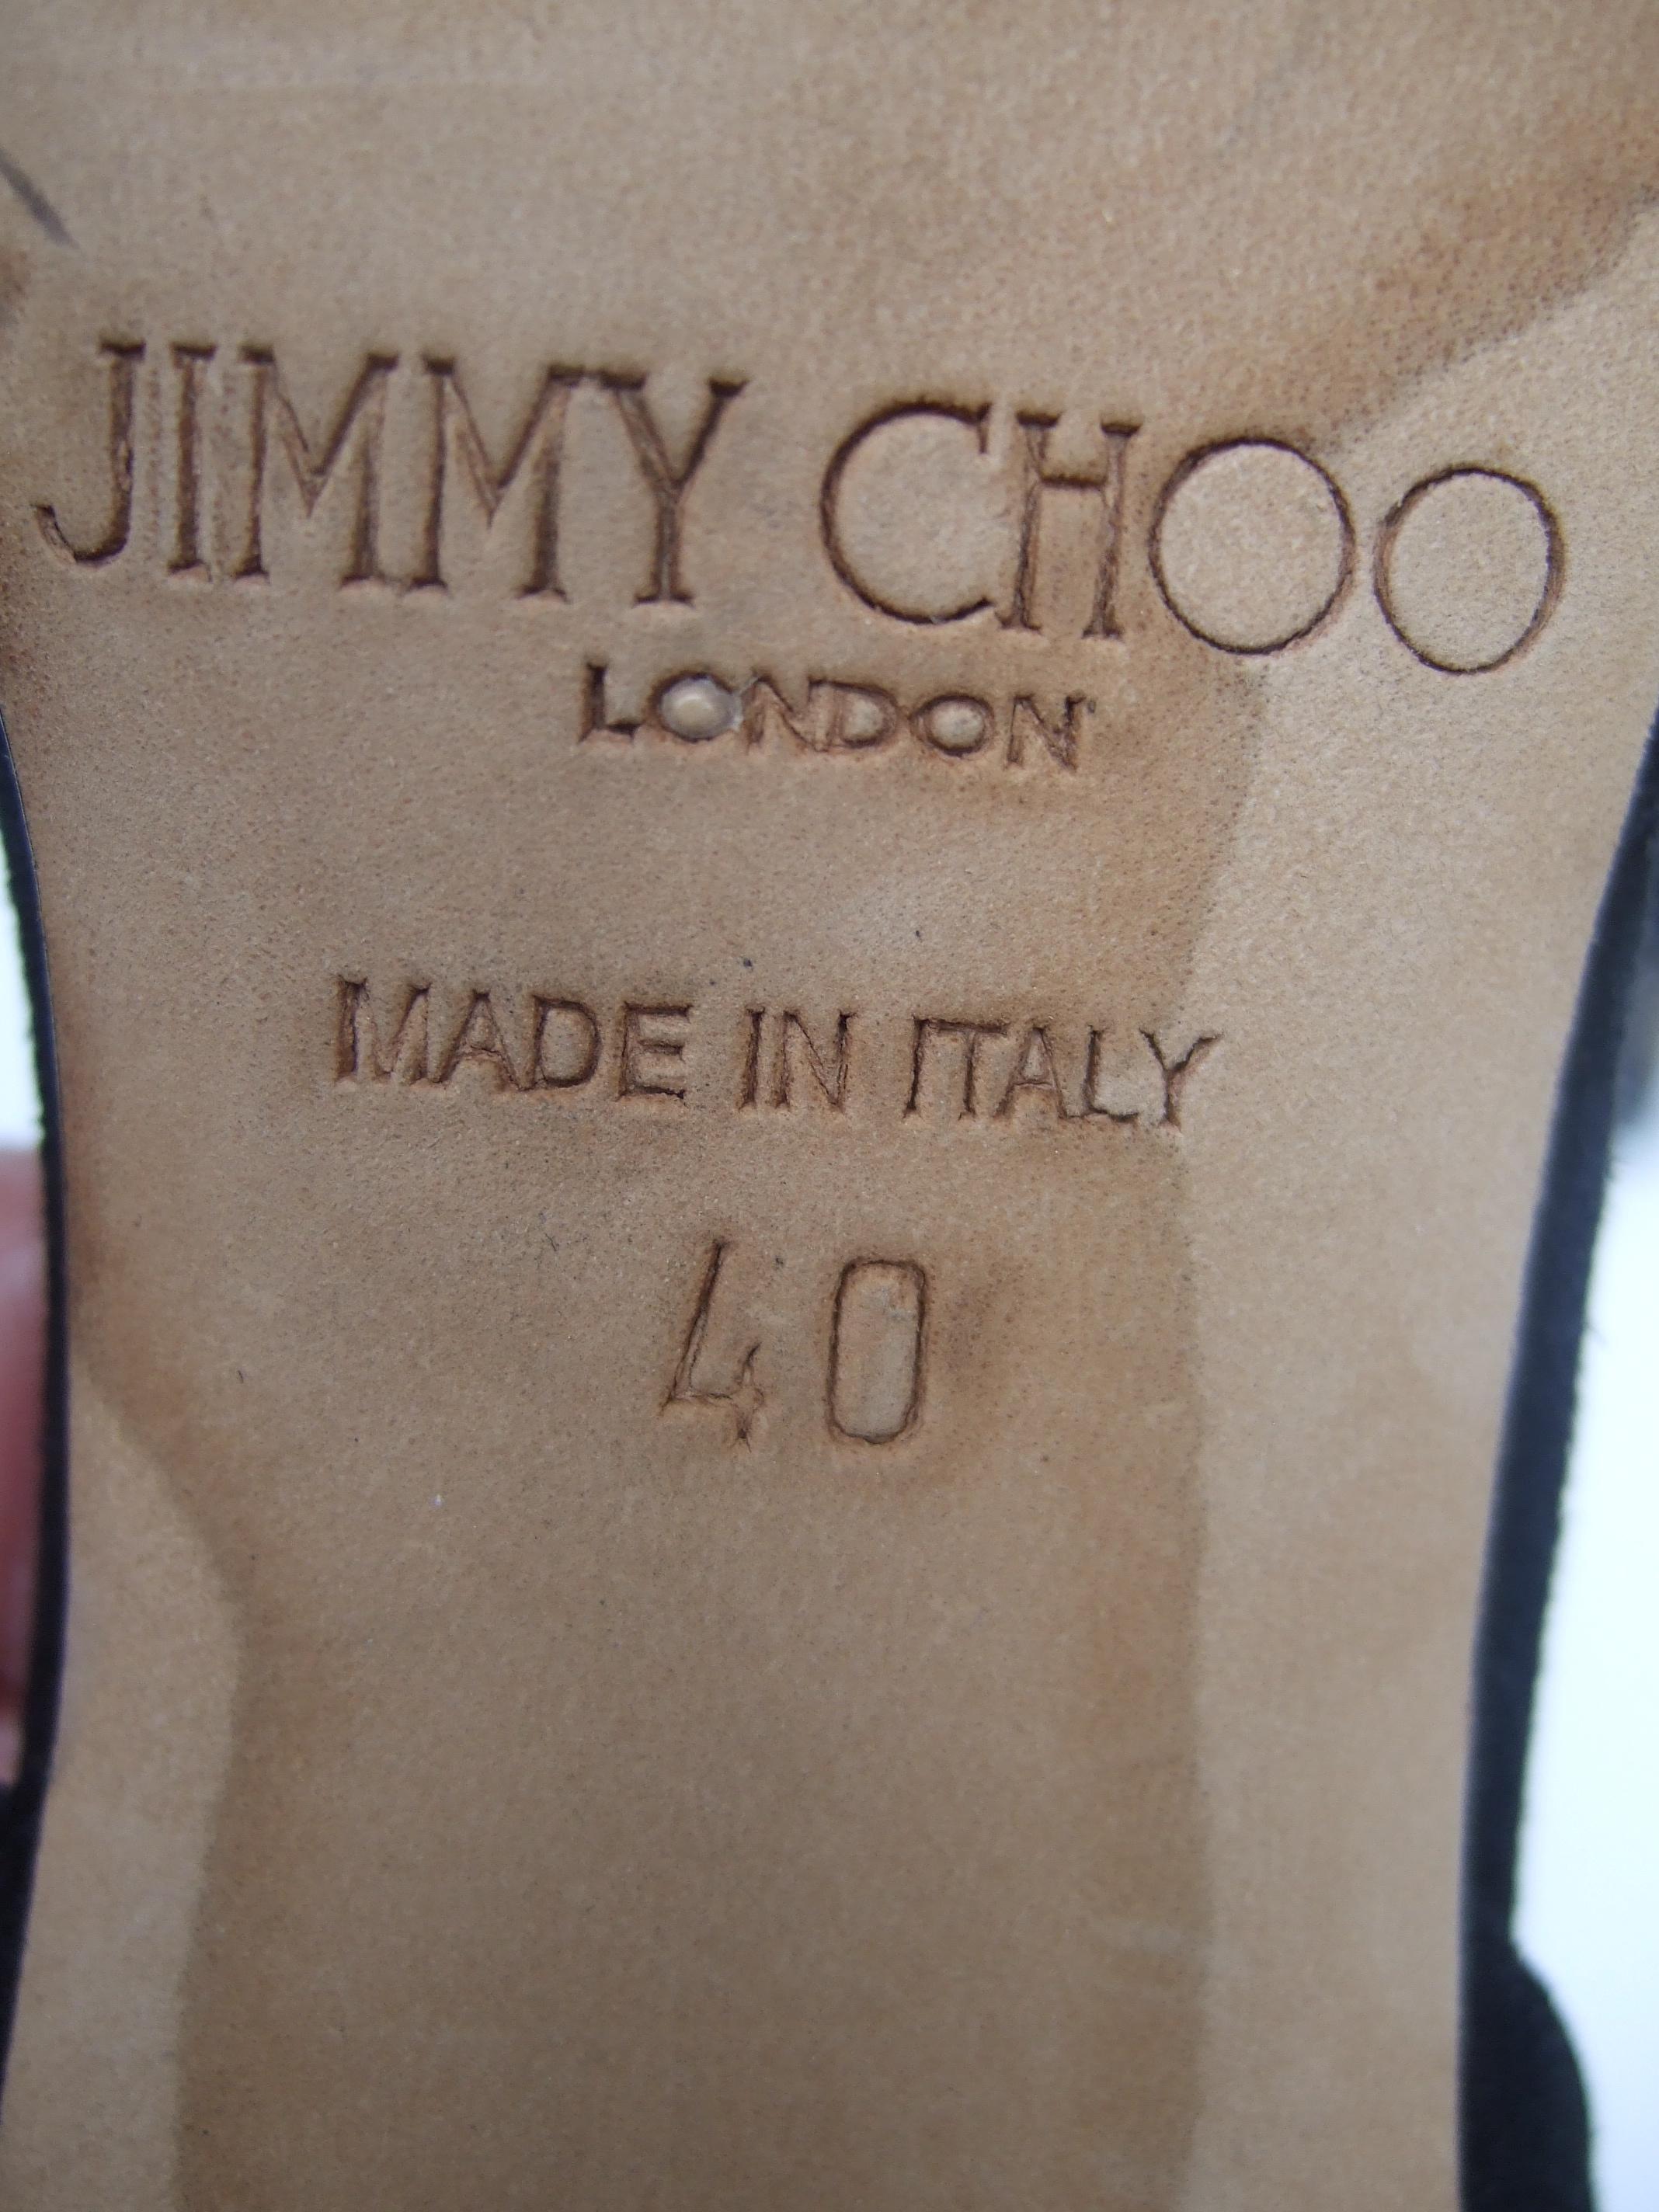 Jimmy Choo London Schwarze Stiletto-Pumps aus gebürstetem Leder Größe 40 c 1990er im Angebot 5